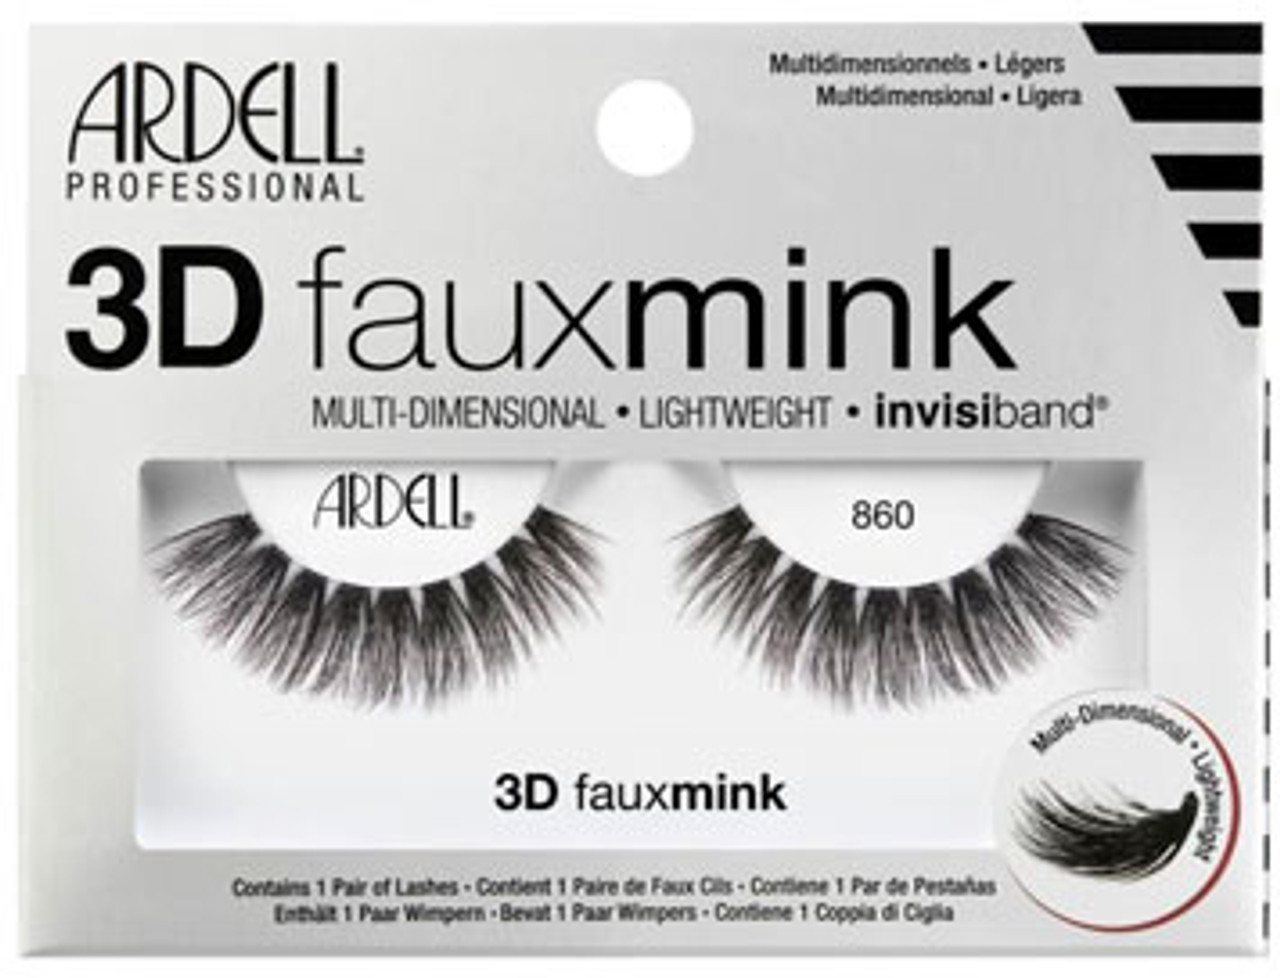 Ardell 3D fauxmink - 860